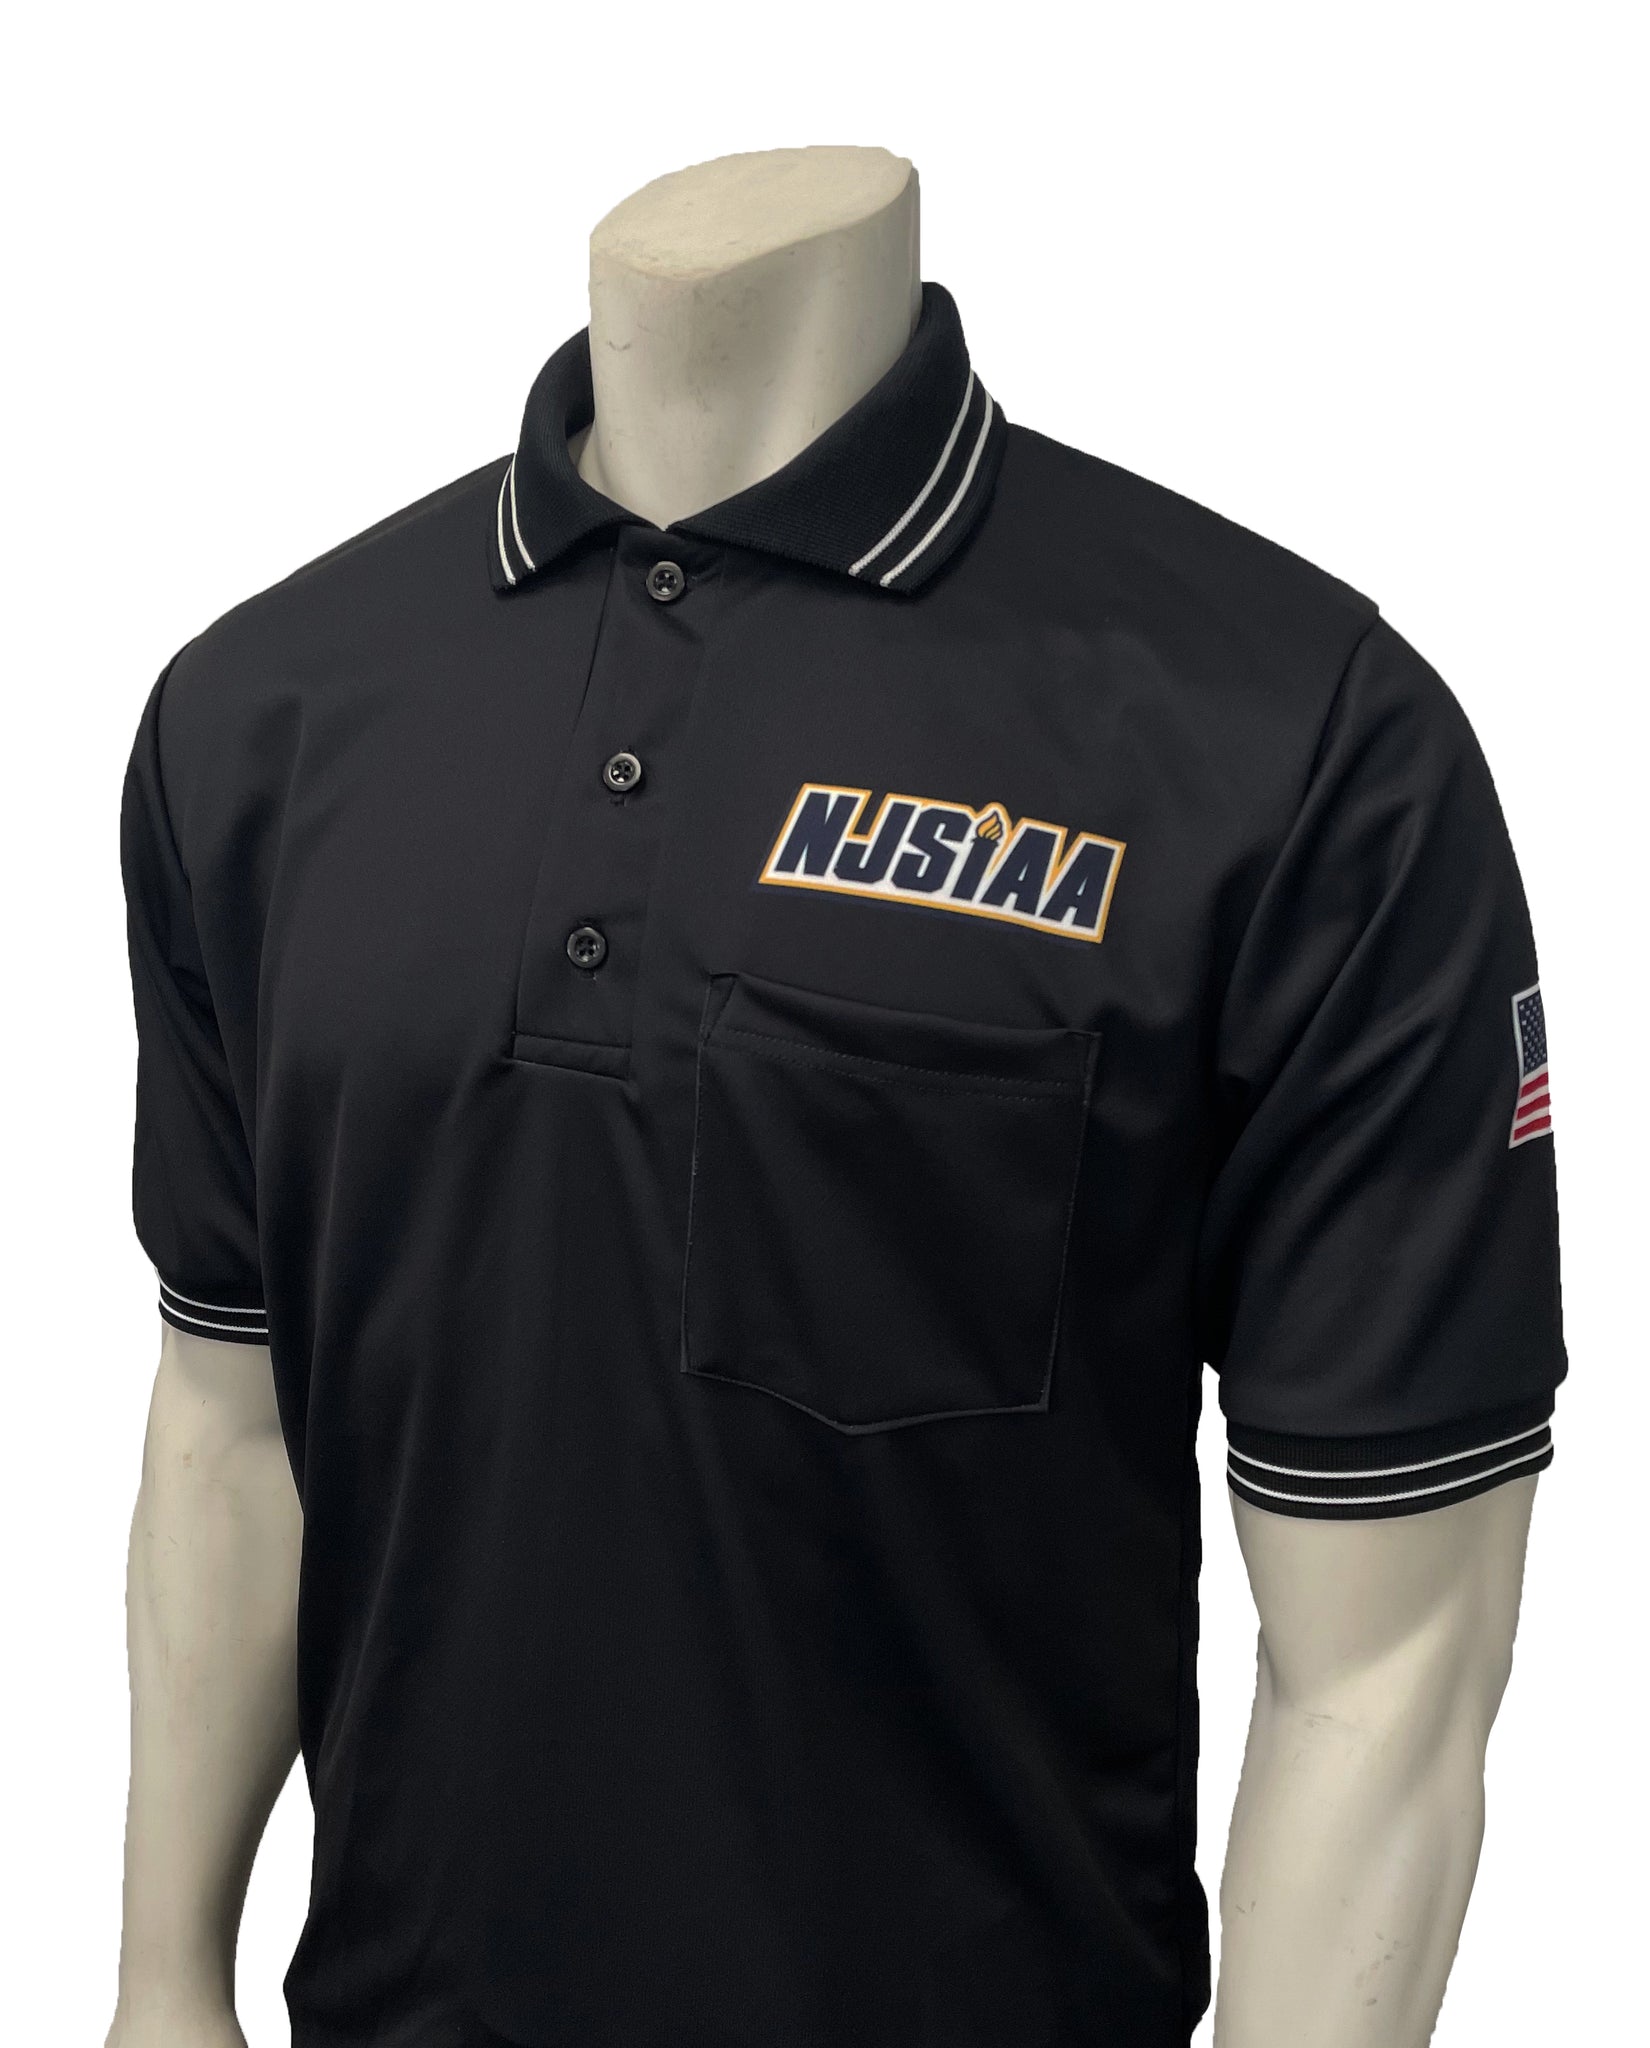 USA300NJ-BLK - Smitty "Made in USA" - NJSIAA Men's Baseball/Softball Umpire Short Sleeve Shirt - Black